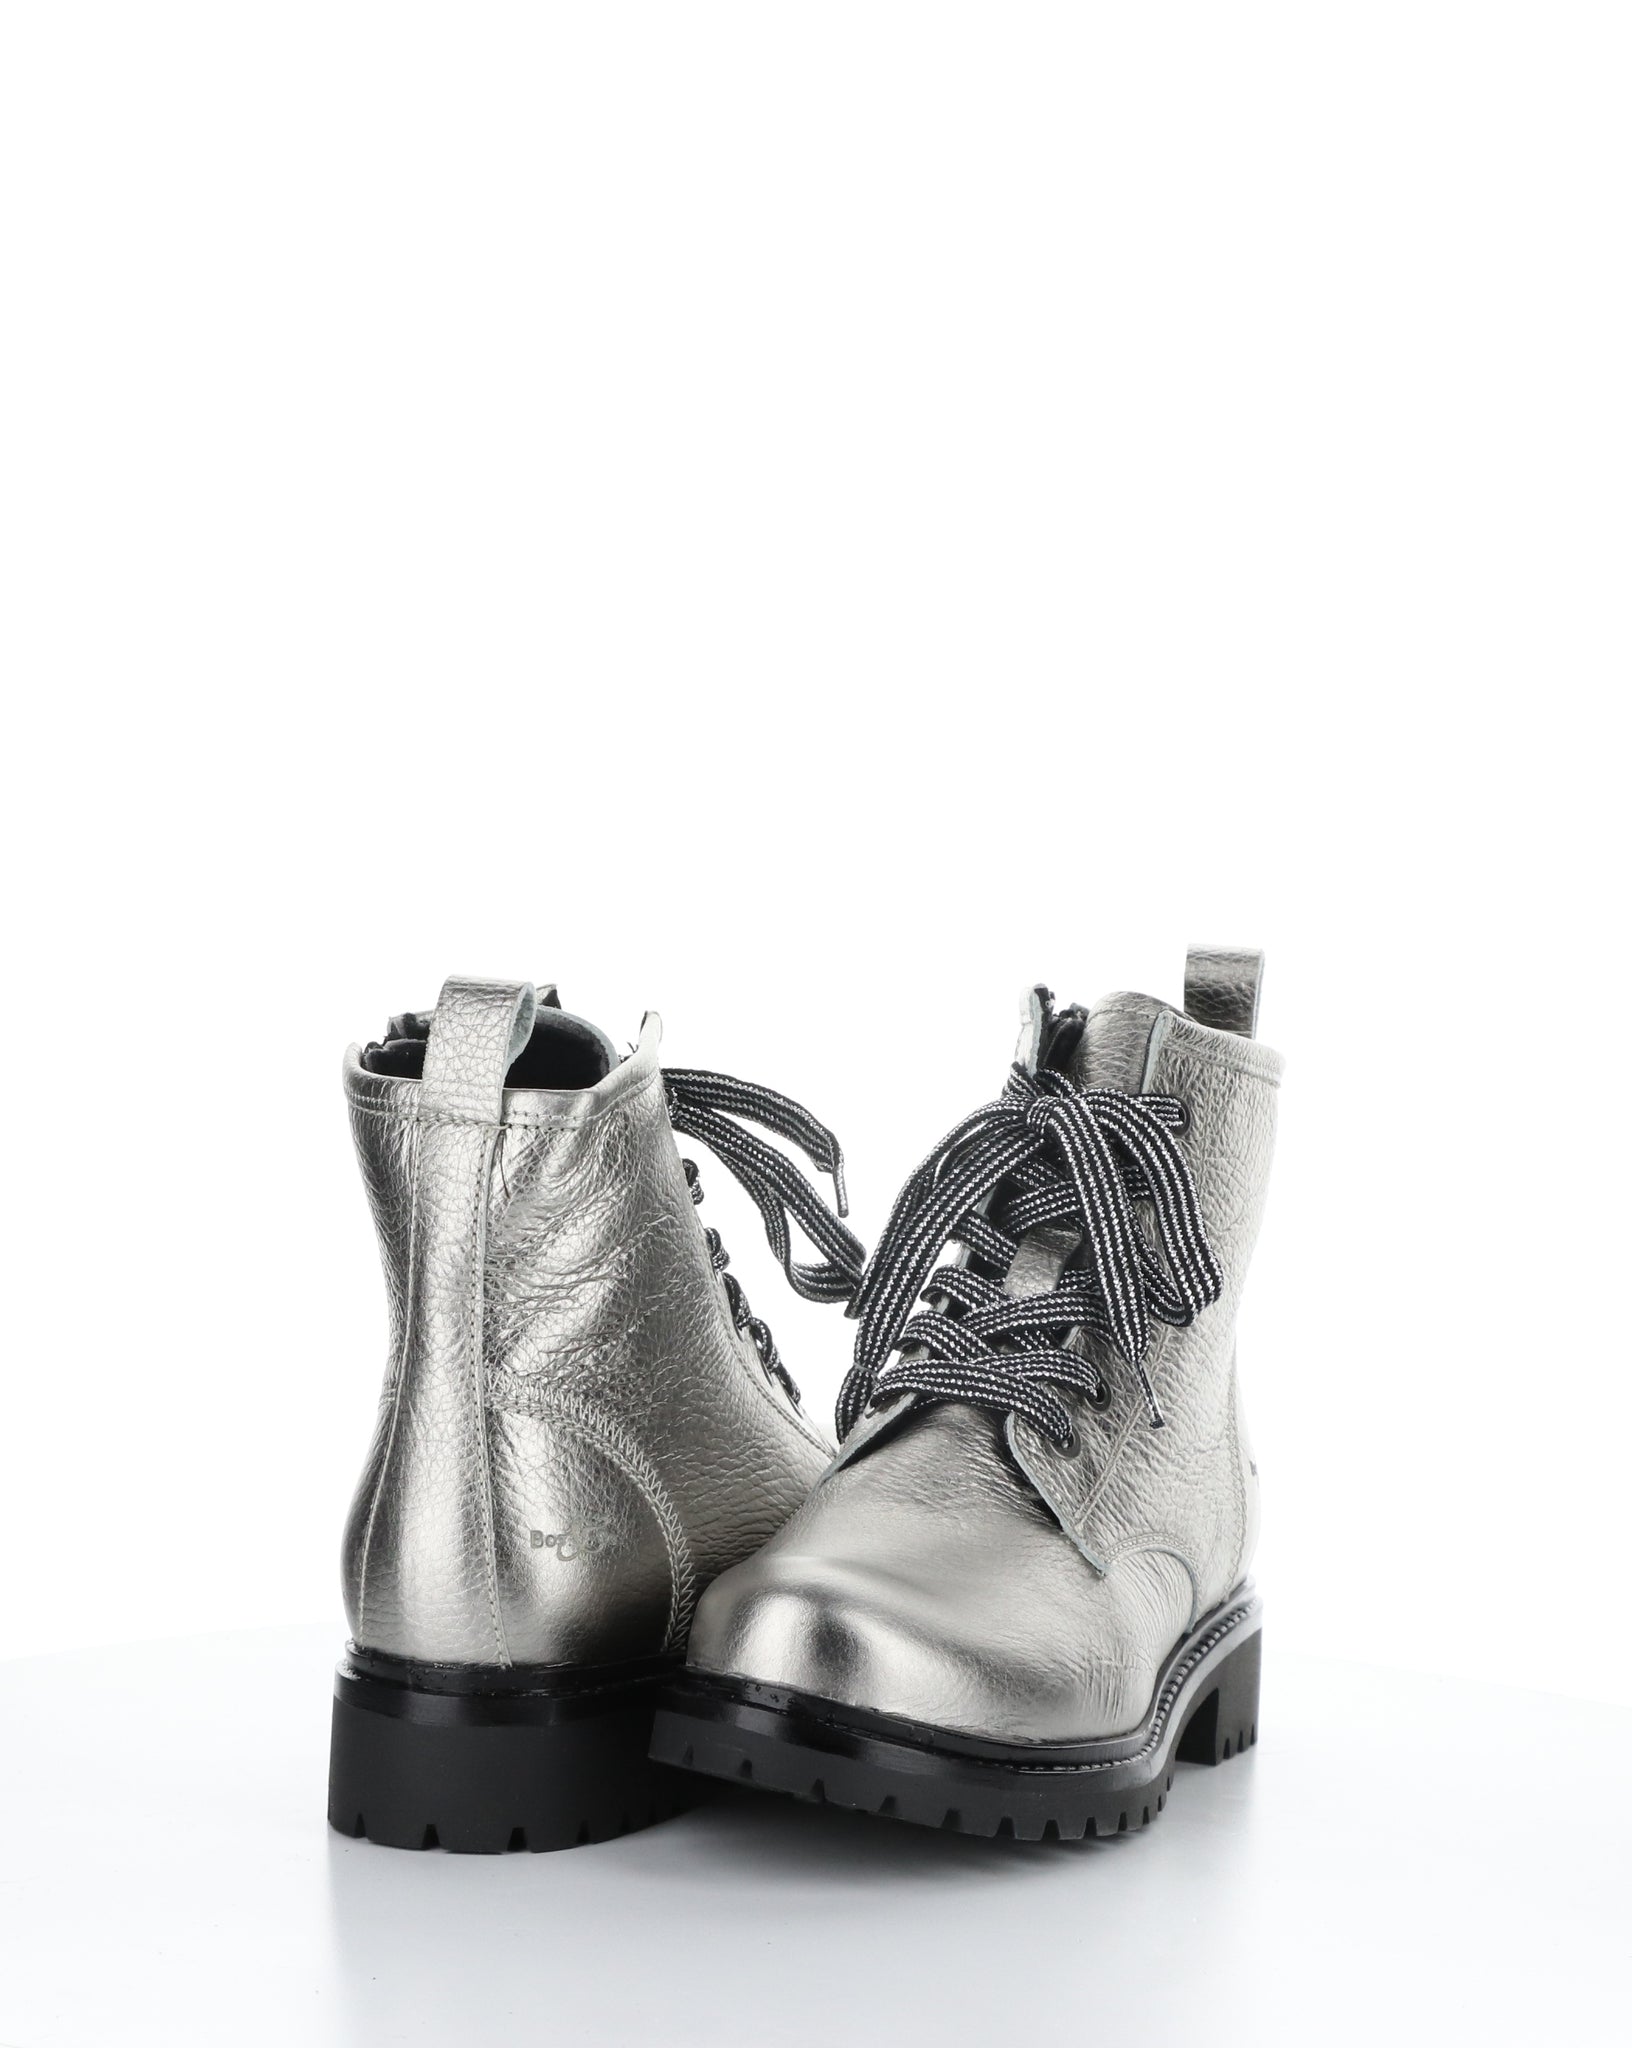 Bos&Co. "Carinas" Pewter - Waterproof boot